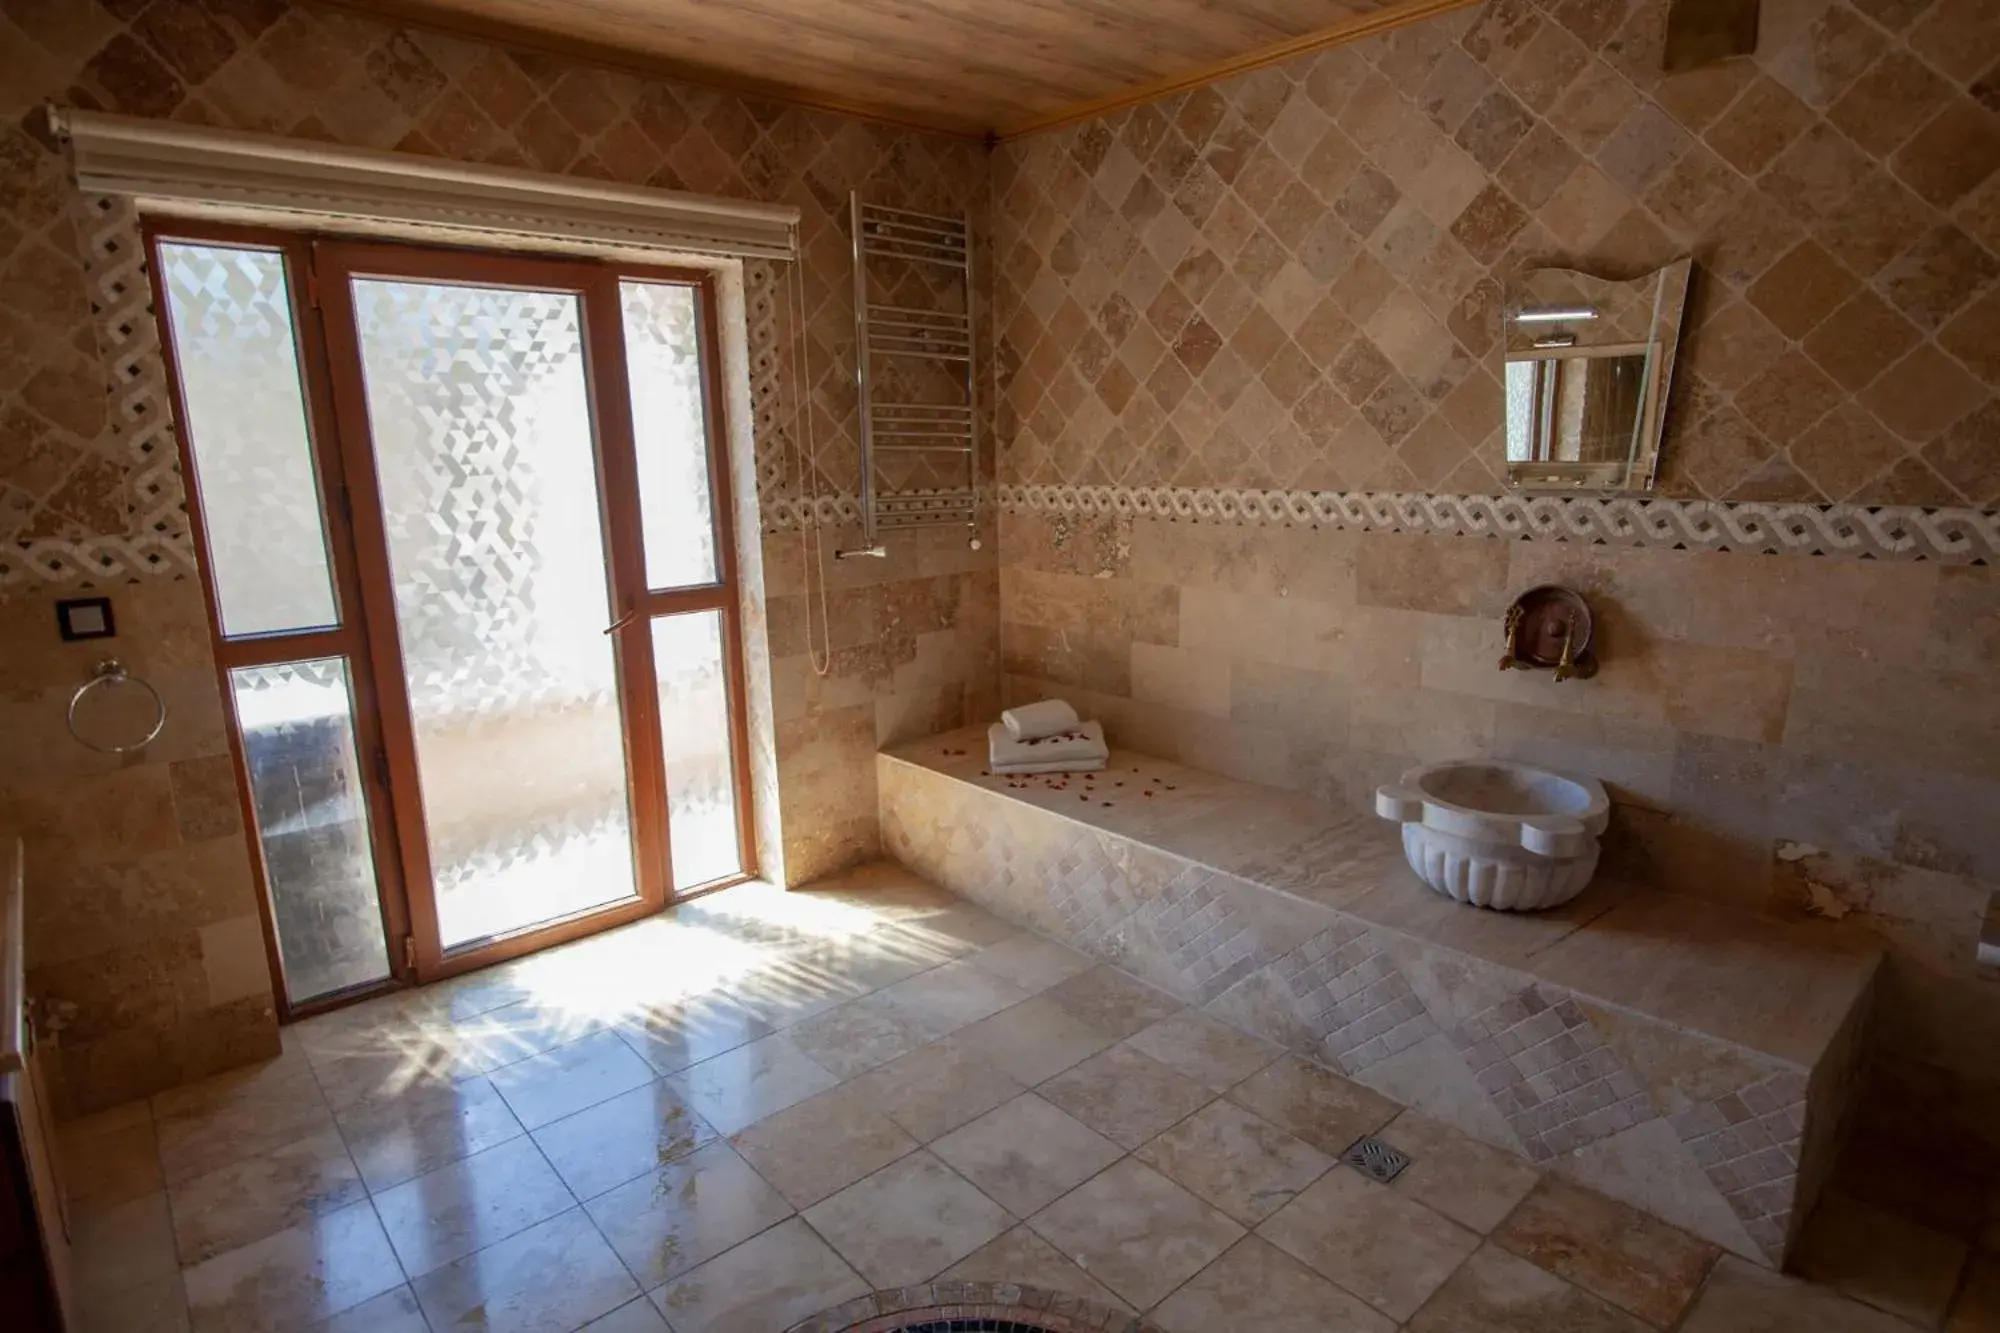 Bathroom in Peace Stone House